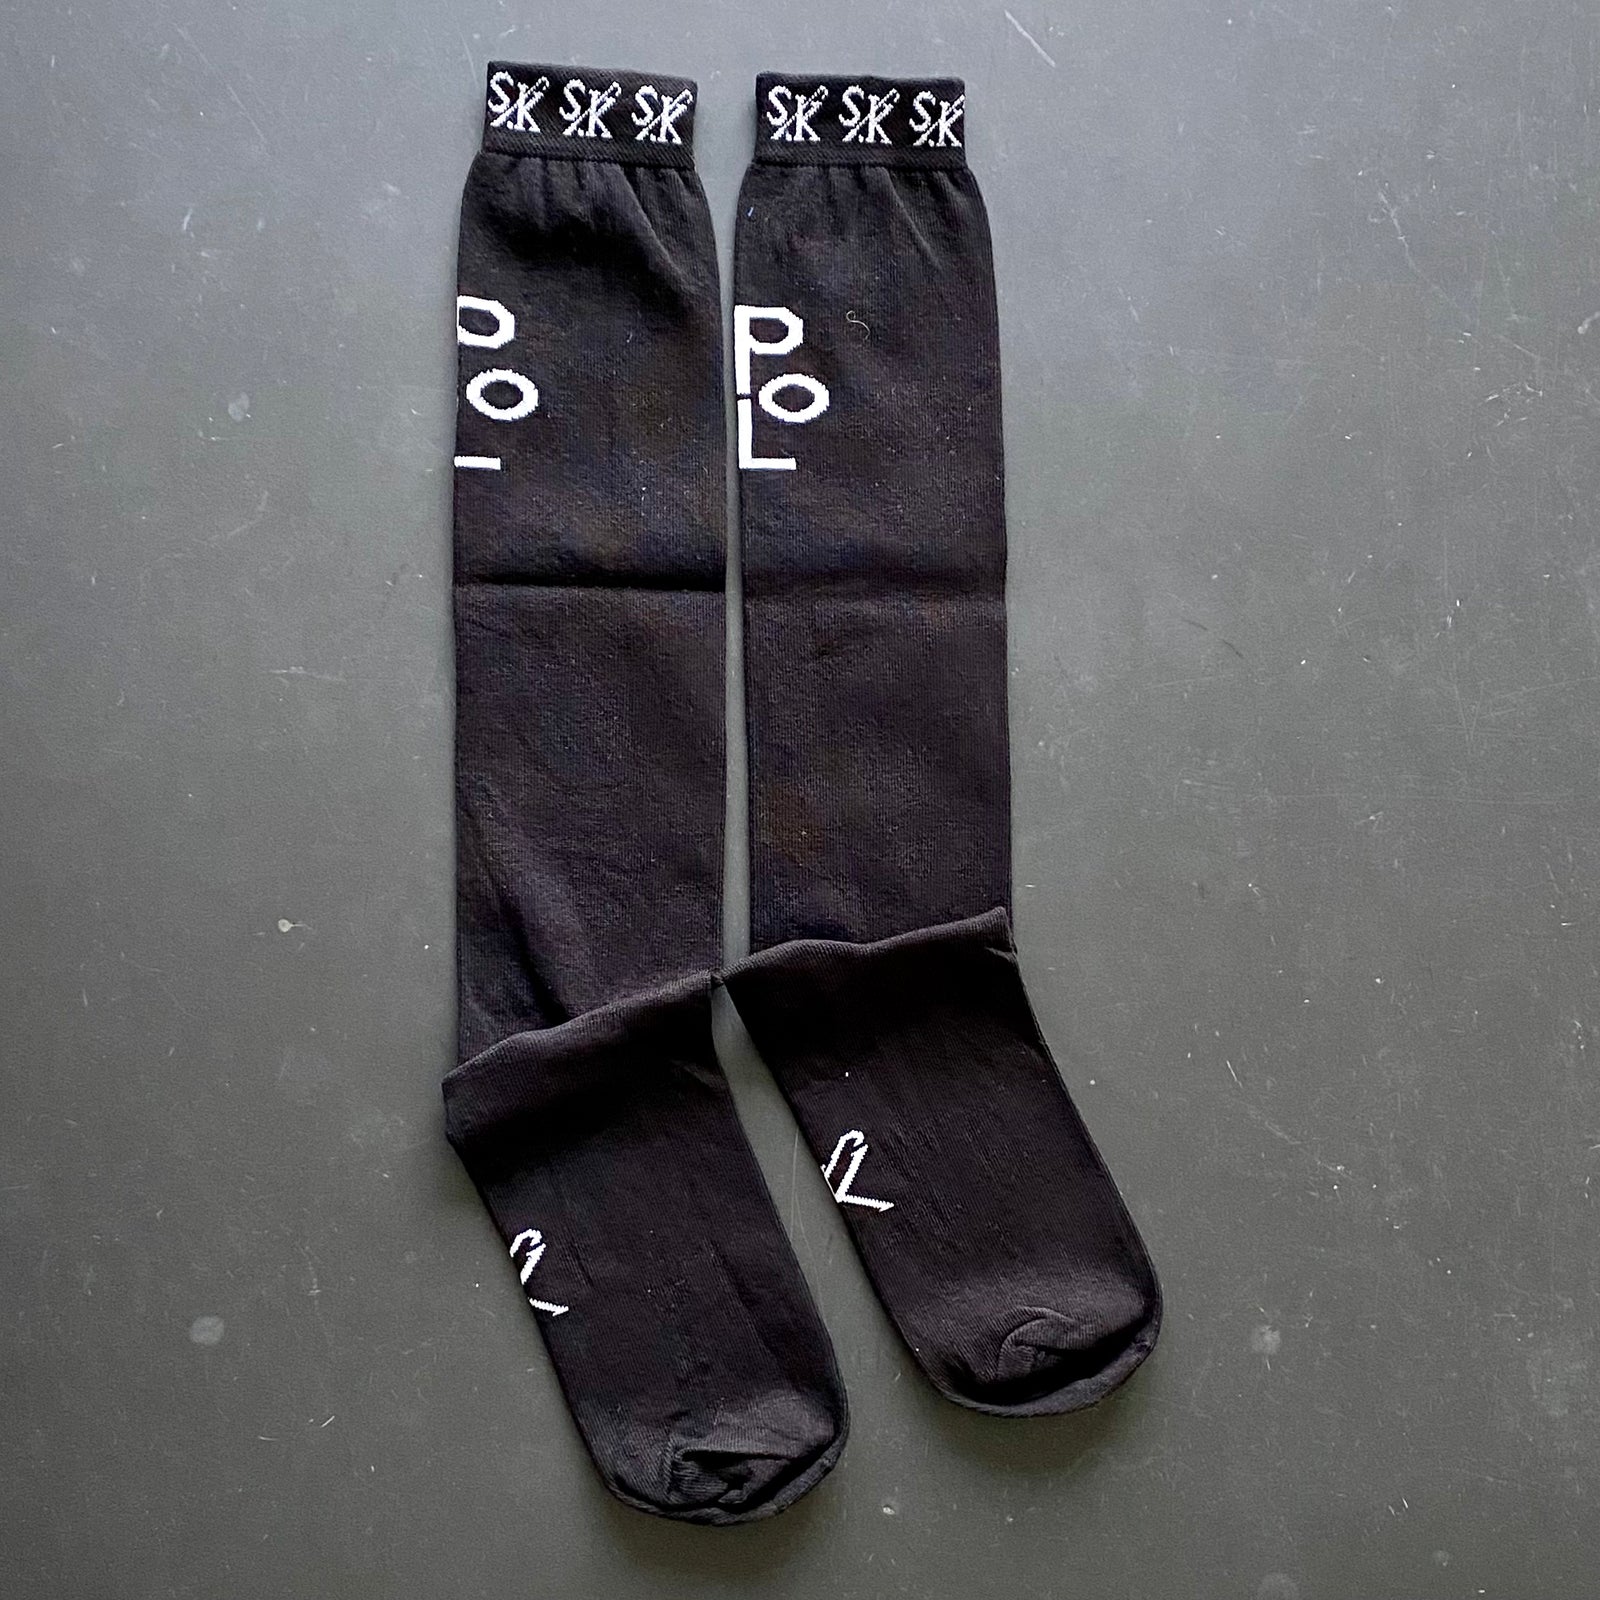 Photo of Black Polo Socks, number 2